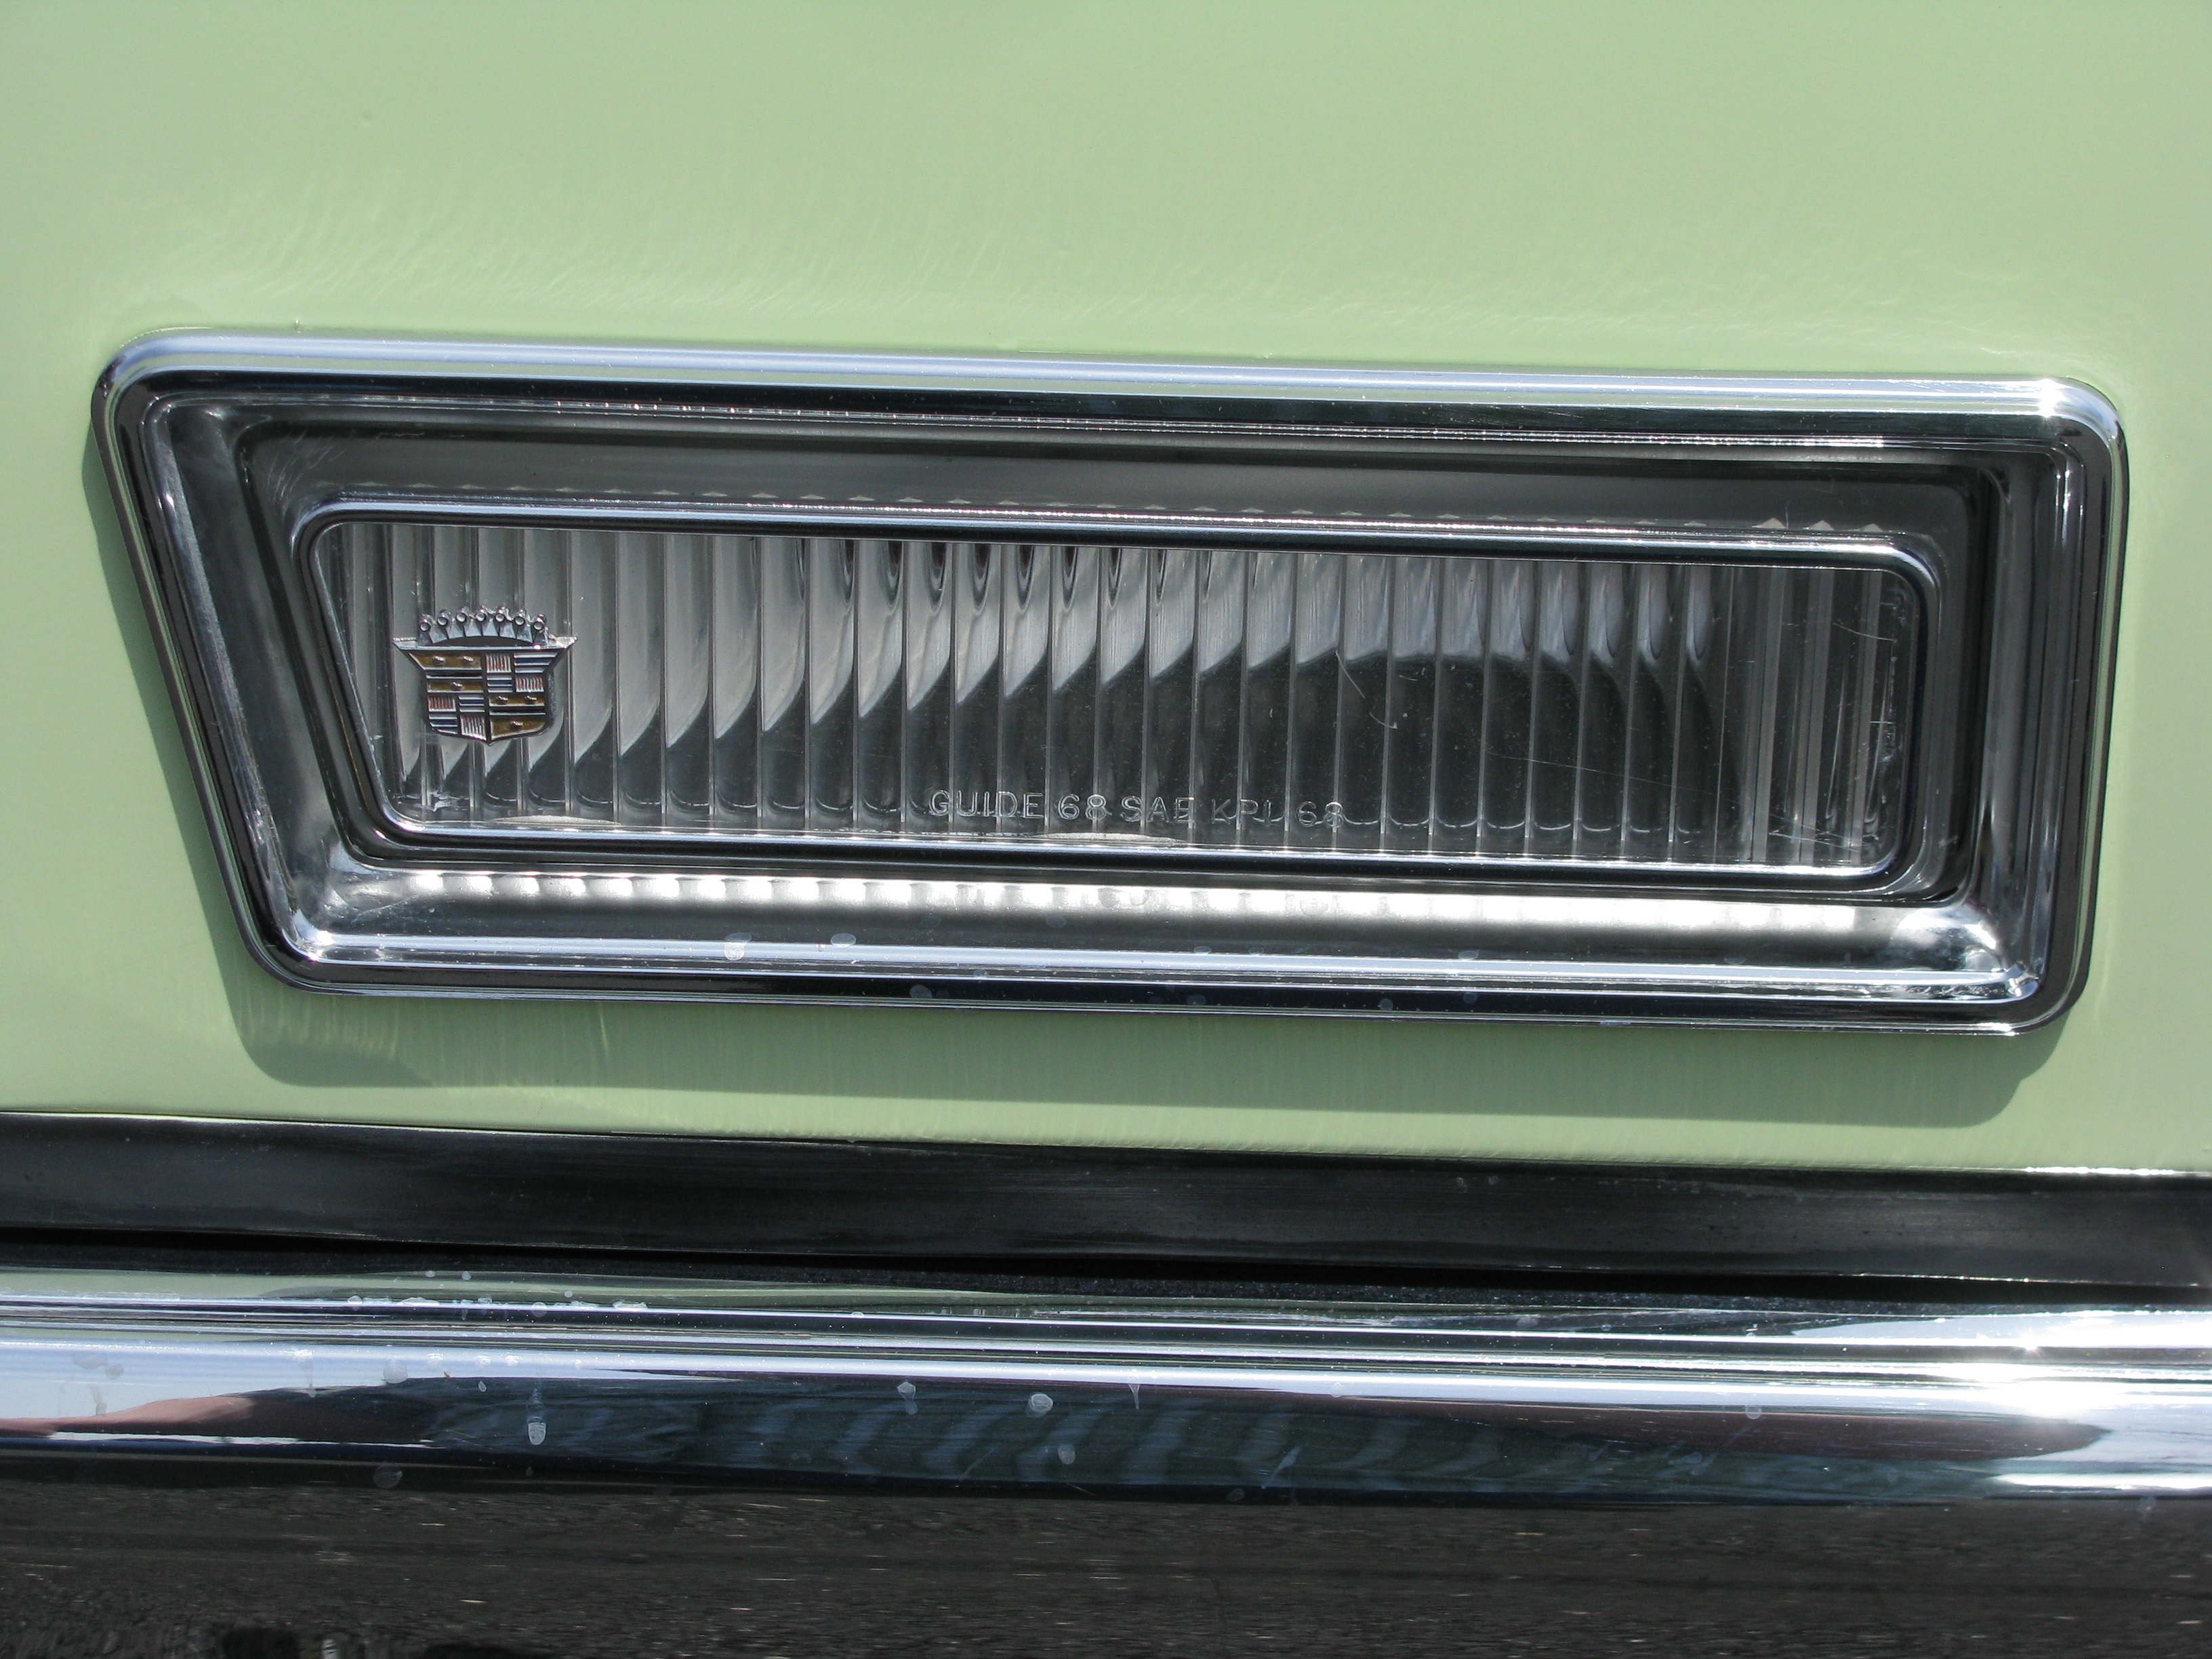 View photo of 1968 Cadillac